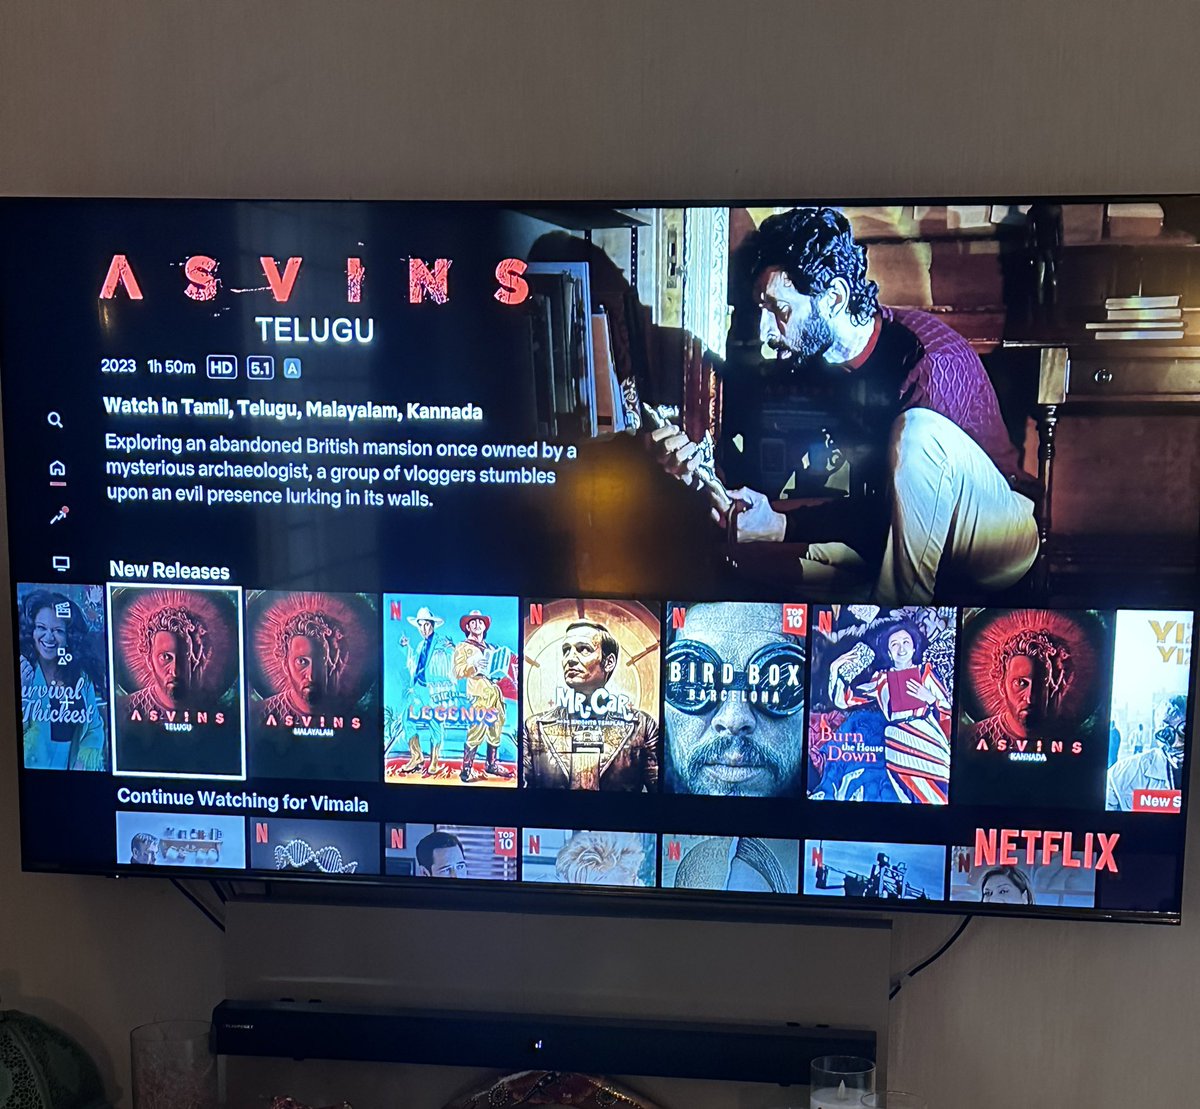 Yayyy and here we are #Asvins now streaming on #Netflix  in multiple languages 🥳👯‍♀️❤️😍 Watch us now !

@taruntejafilm @iamvasanthravi @immuralidaran @Sarasmenon @ivijaysiddharth @Synccinema @edwinsakaydop @praveen2000 @BvsnP